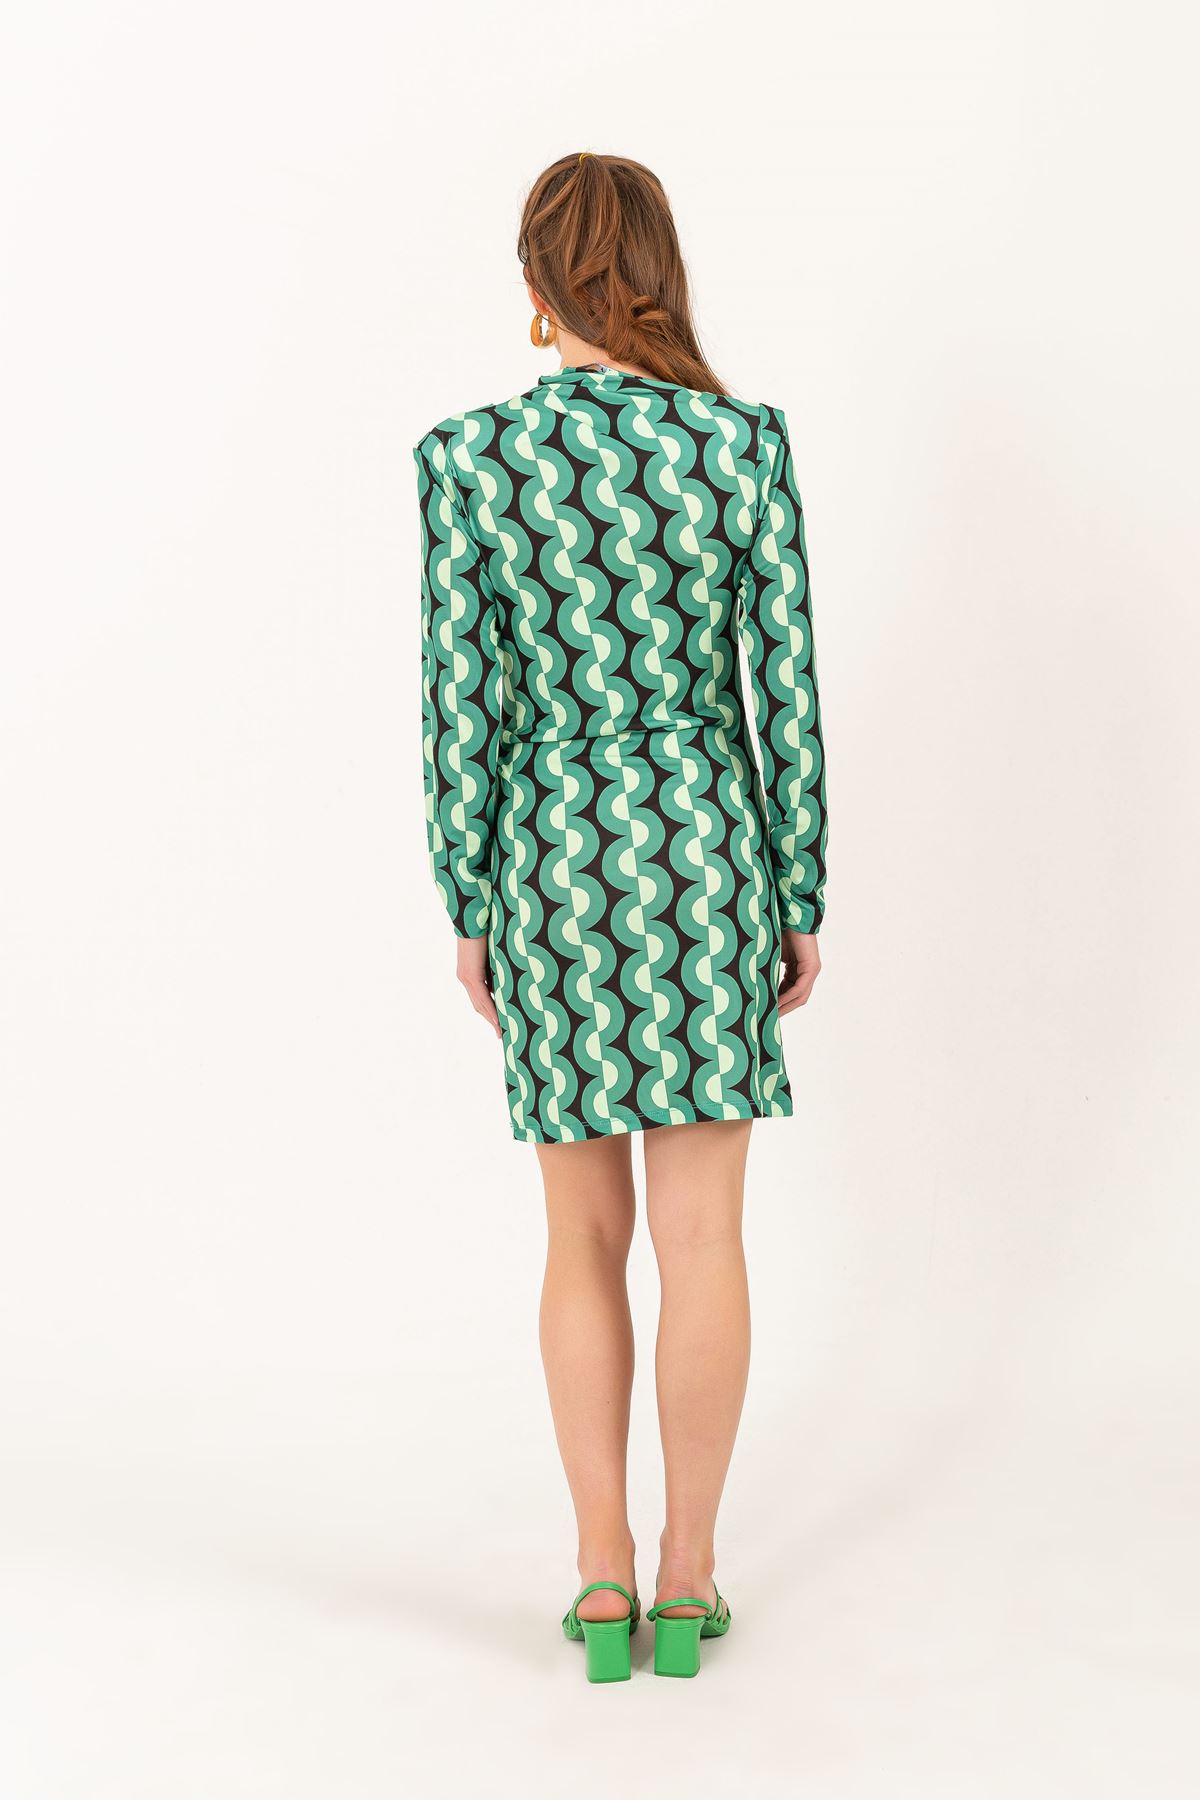 Sandy Fabric Tight Fit Geometric Pattern Padded Women Dress-Green